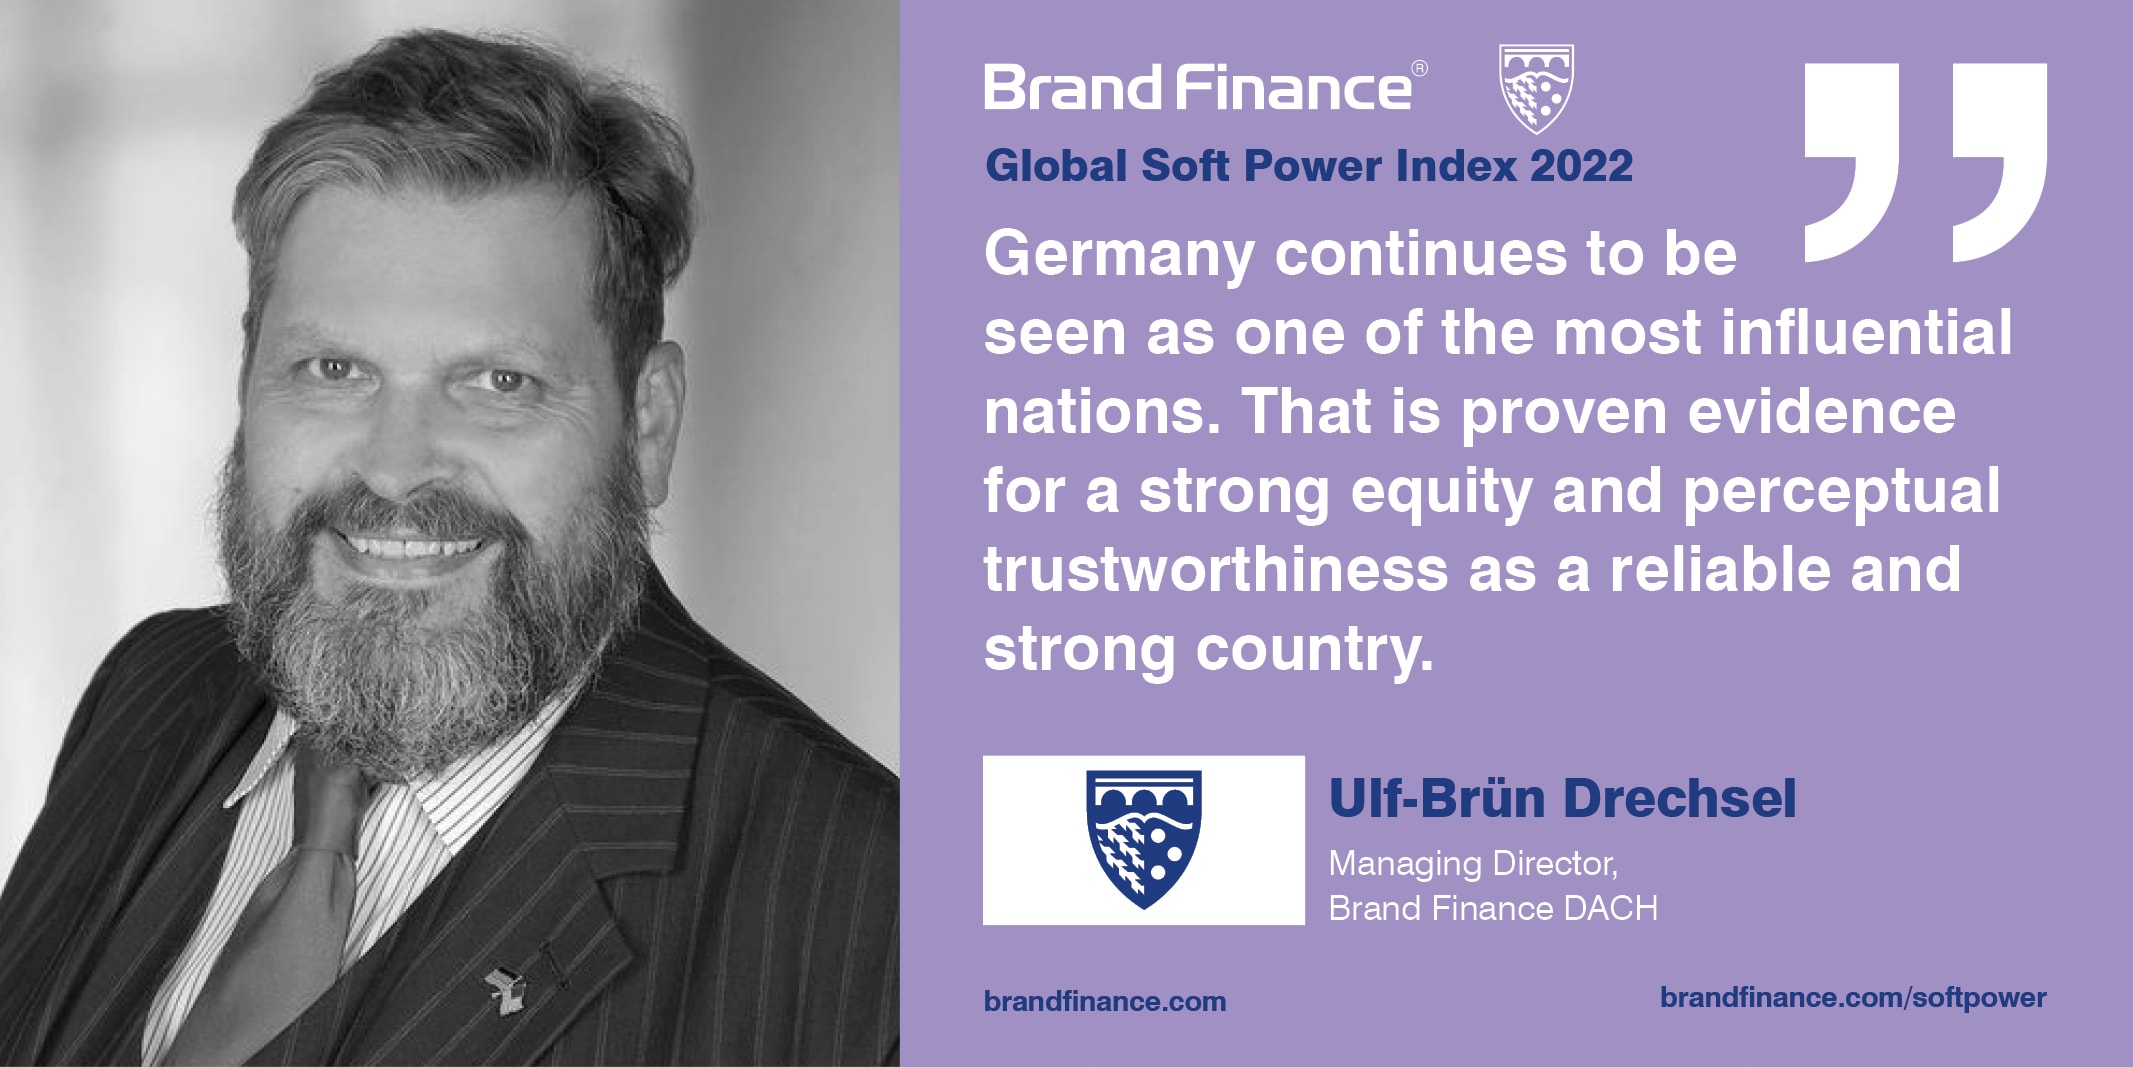 Ulf-Brün Drechsel, Managing Director, Brand Finance DACH